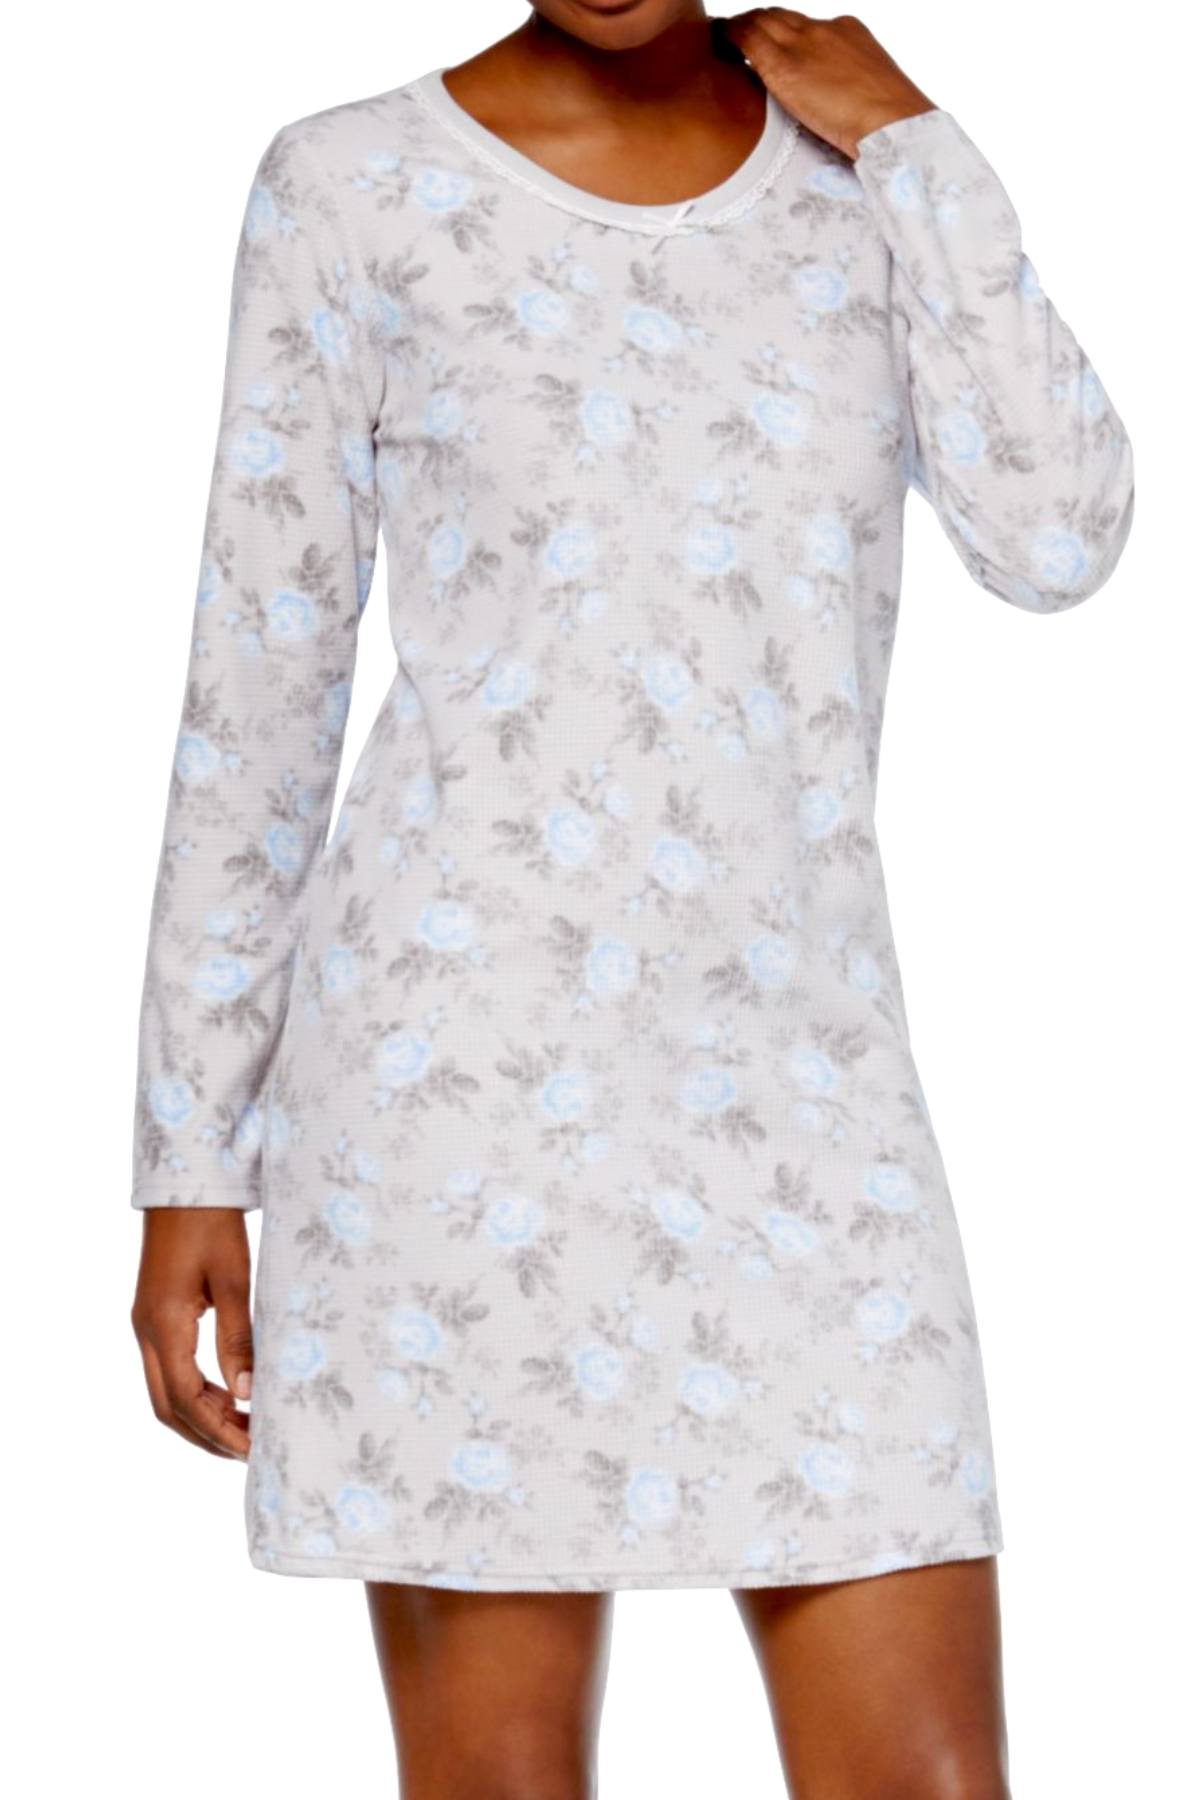 Charter Club Intimates Grey Rose-Floral Printed Thermal Fleece Sleepshirt